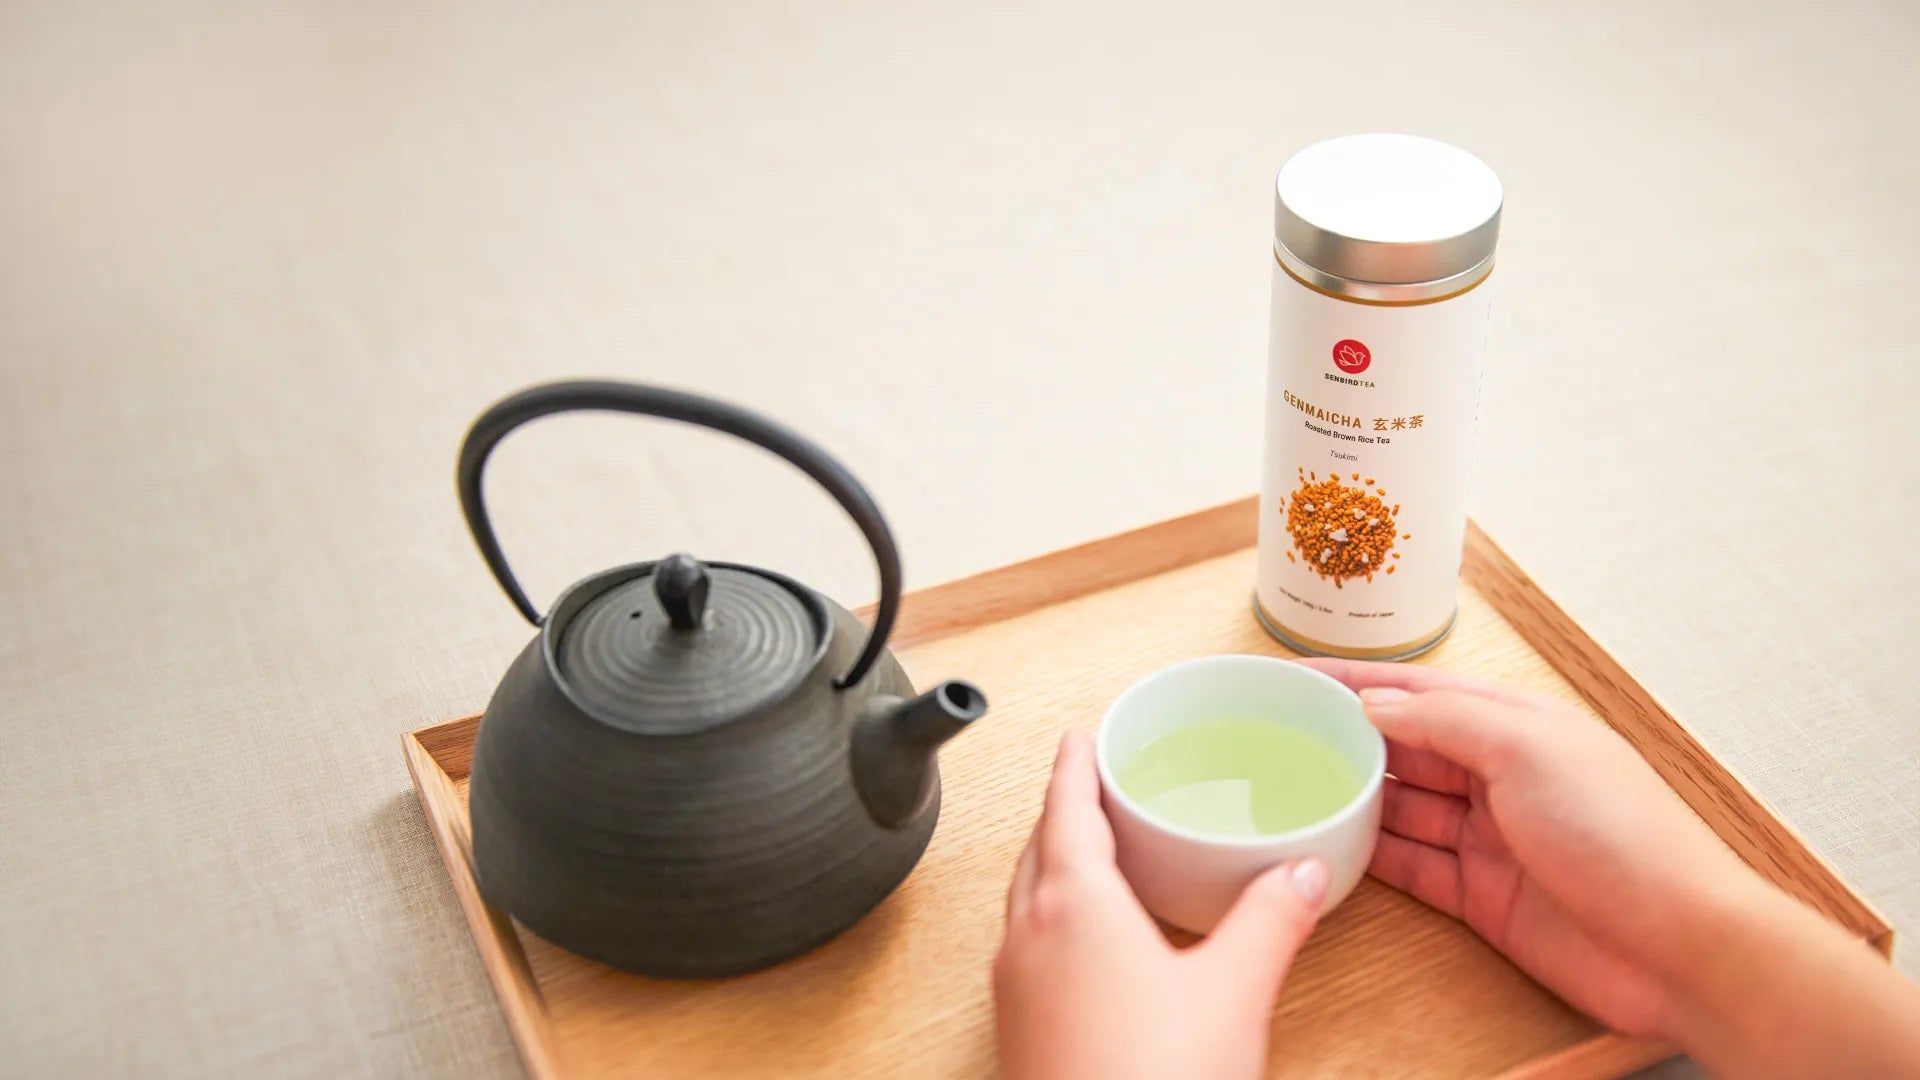 brewed genmaicha tsukimi caffeine free tea in white tea cup with tetsubin tea pot